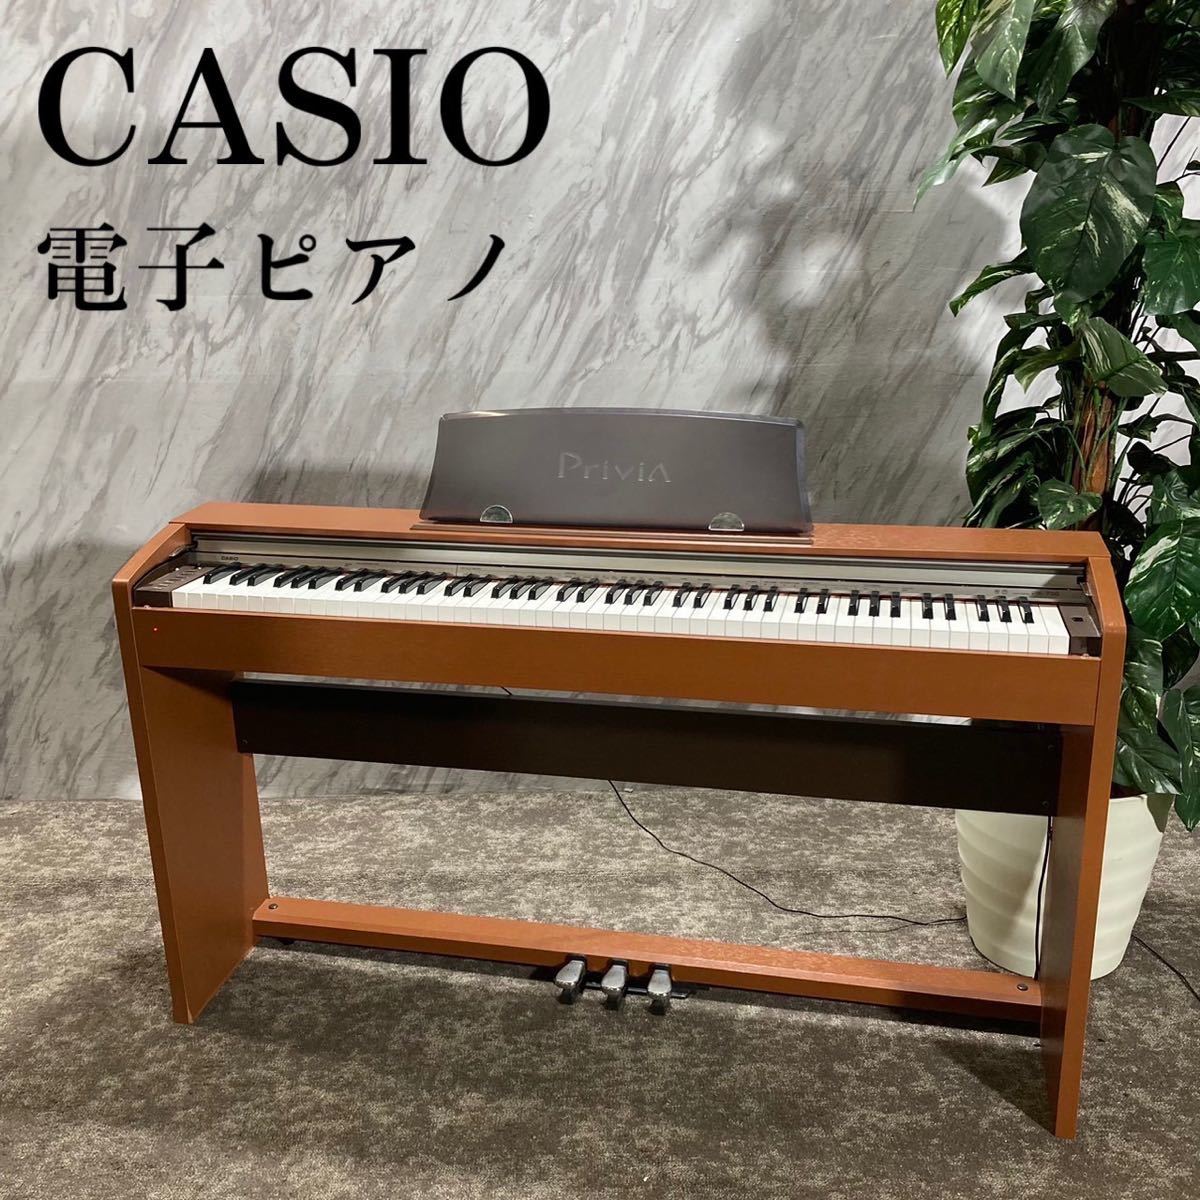 CASIO カシオ PX-730CY 電子ピアノ Privia 鍵盤 K221-